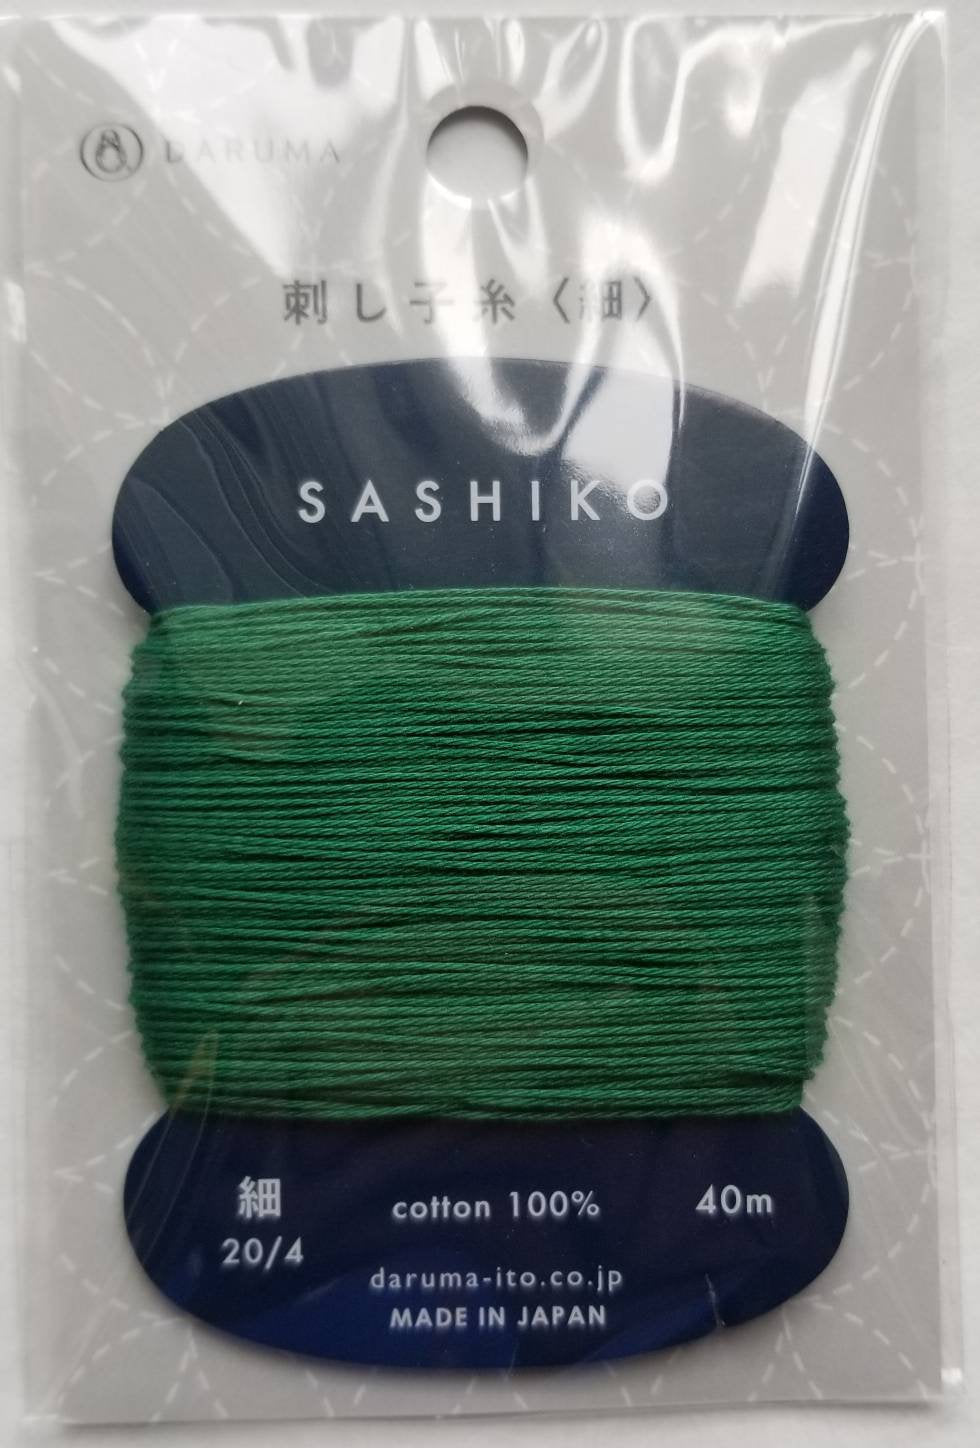 Daruma #208 BAMBOO GREEN Japanese Cotton SASHIKO thread 40 meter skein 20/4